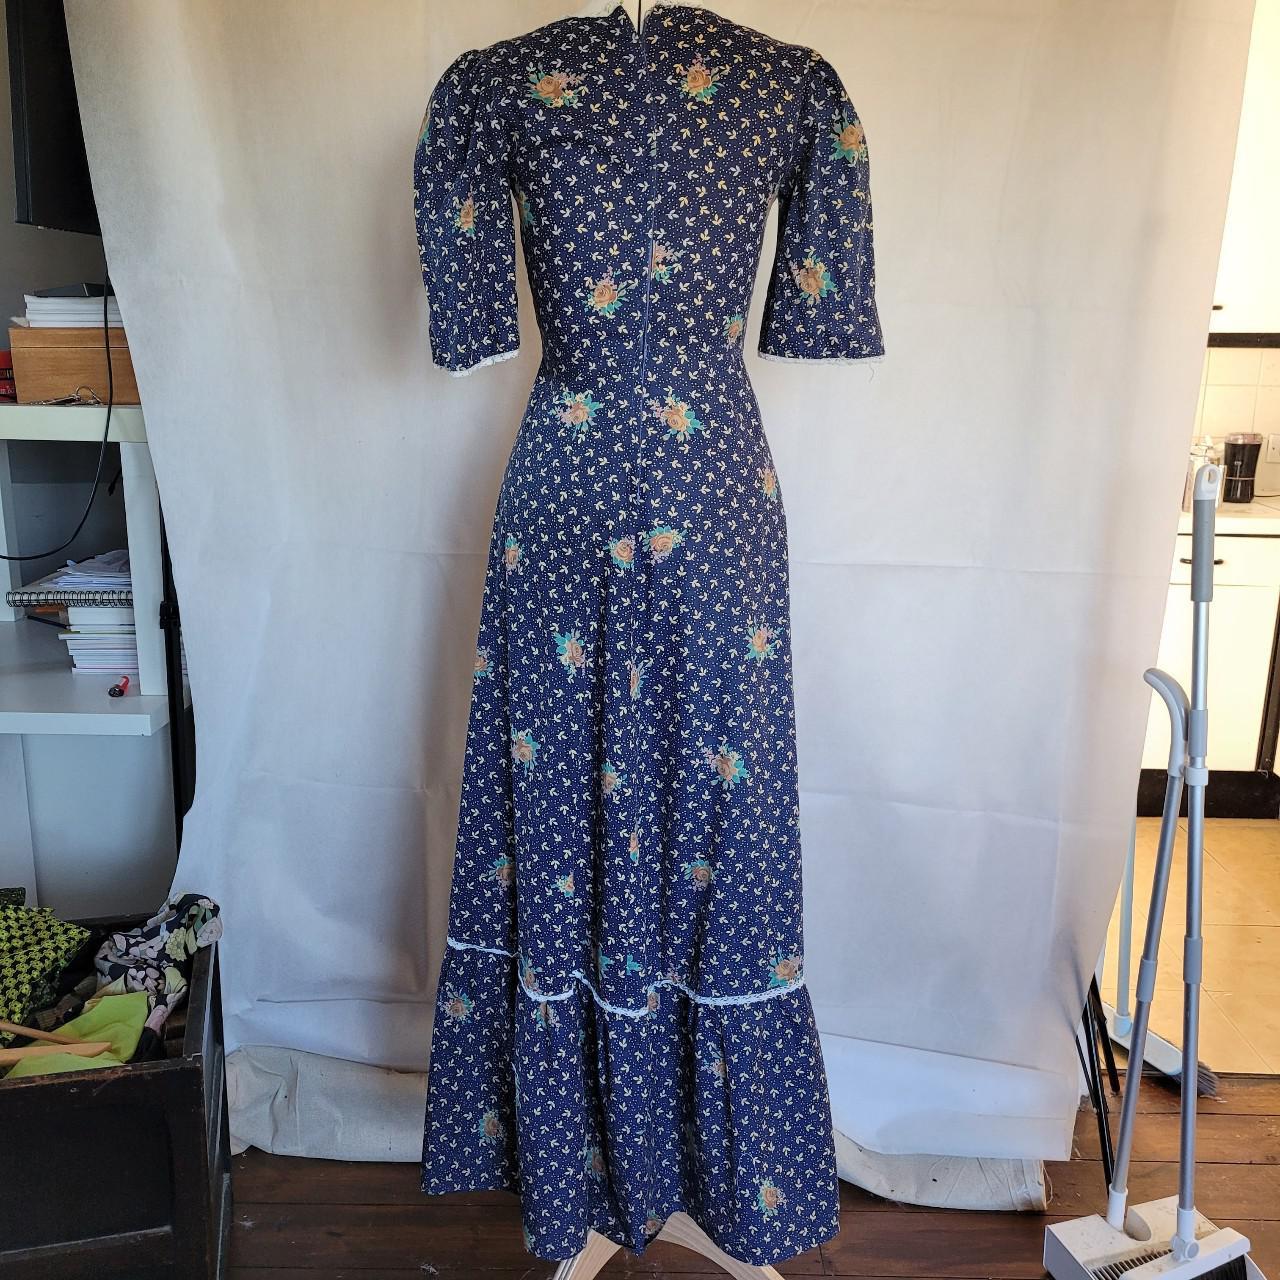 Product Image 4 - 1970s prairie dress 

Excellent condition